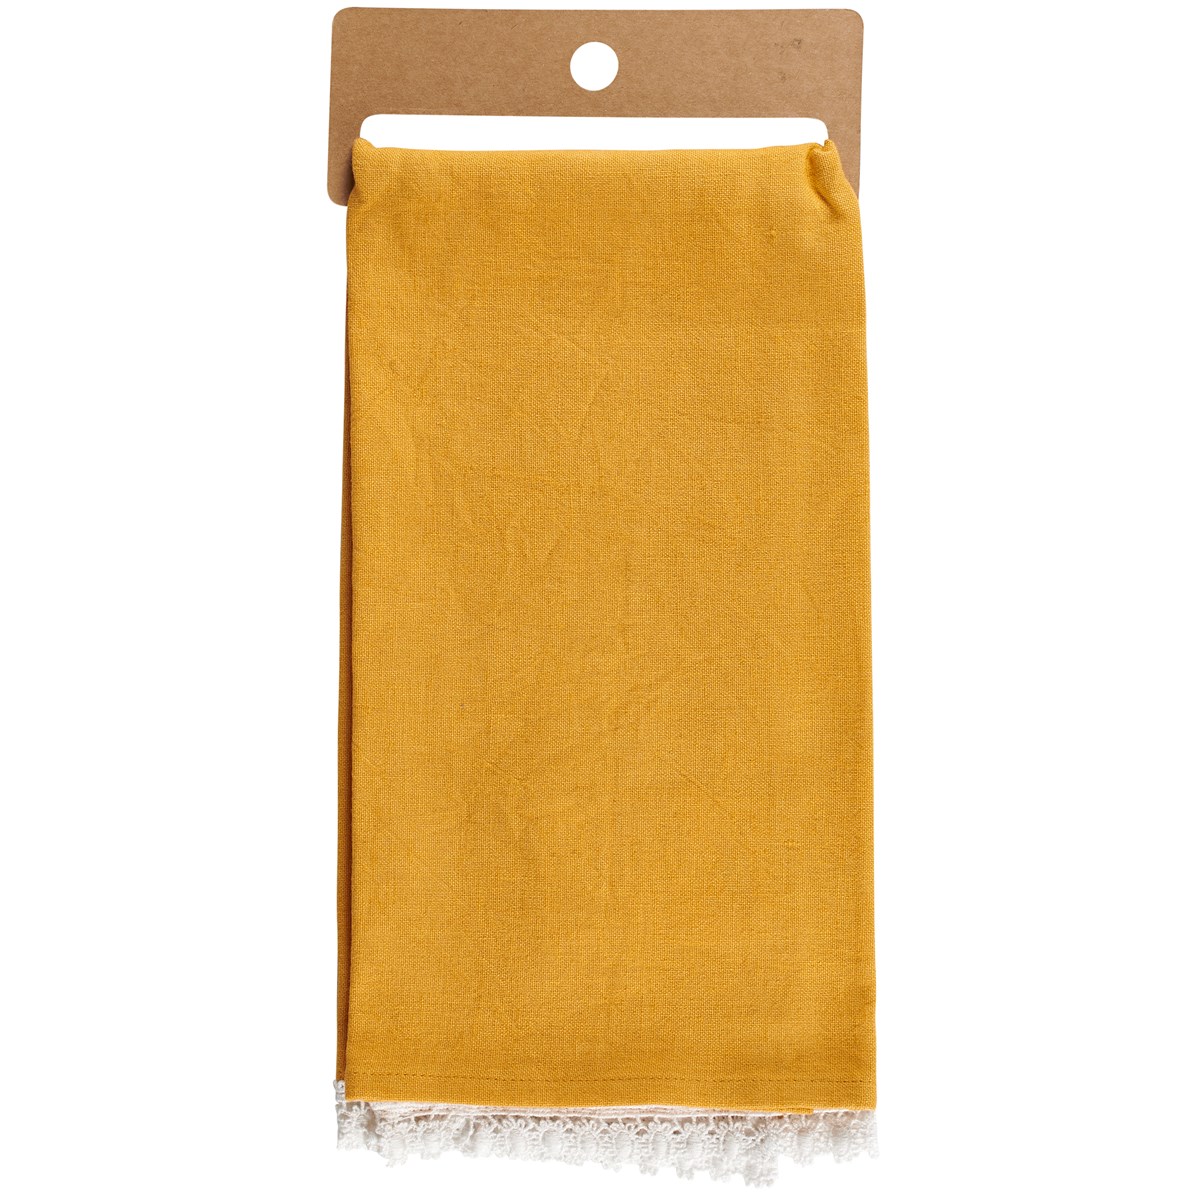 Hello Sunshine Kitchen Towel - Cotton, Linen